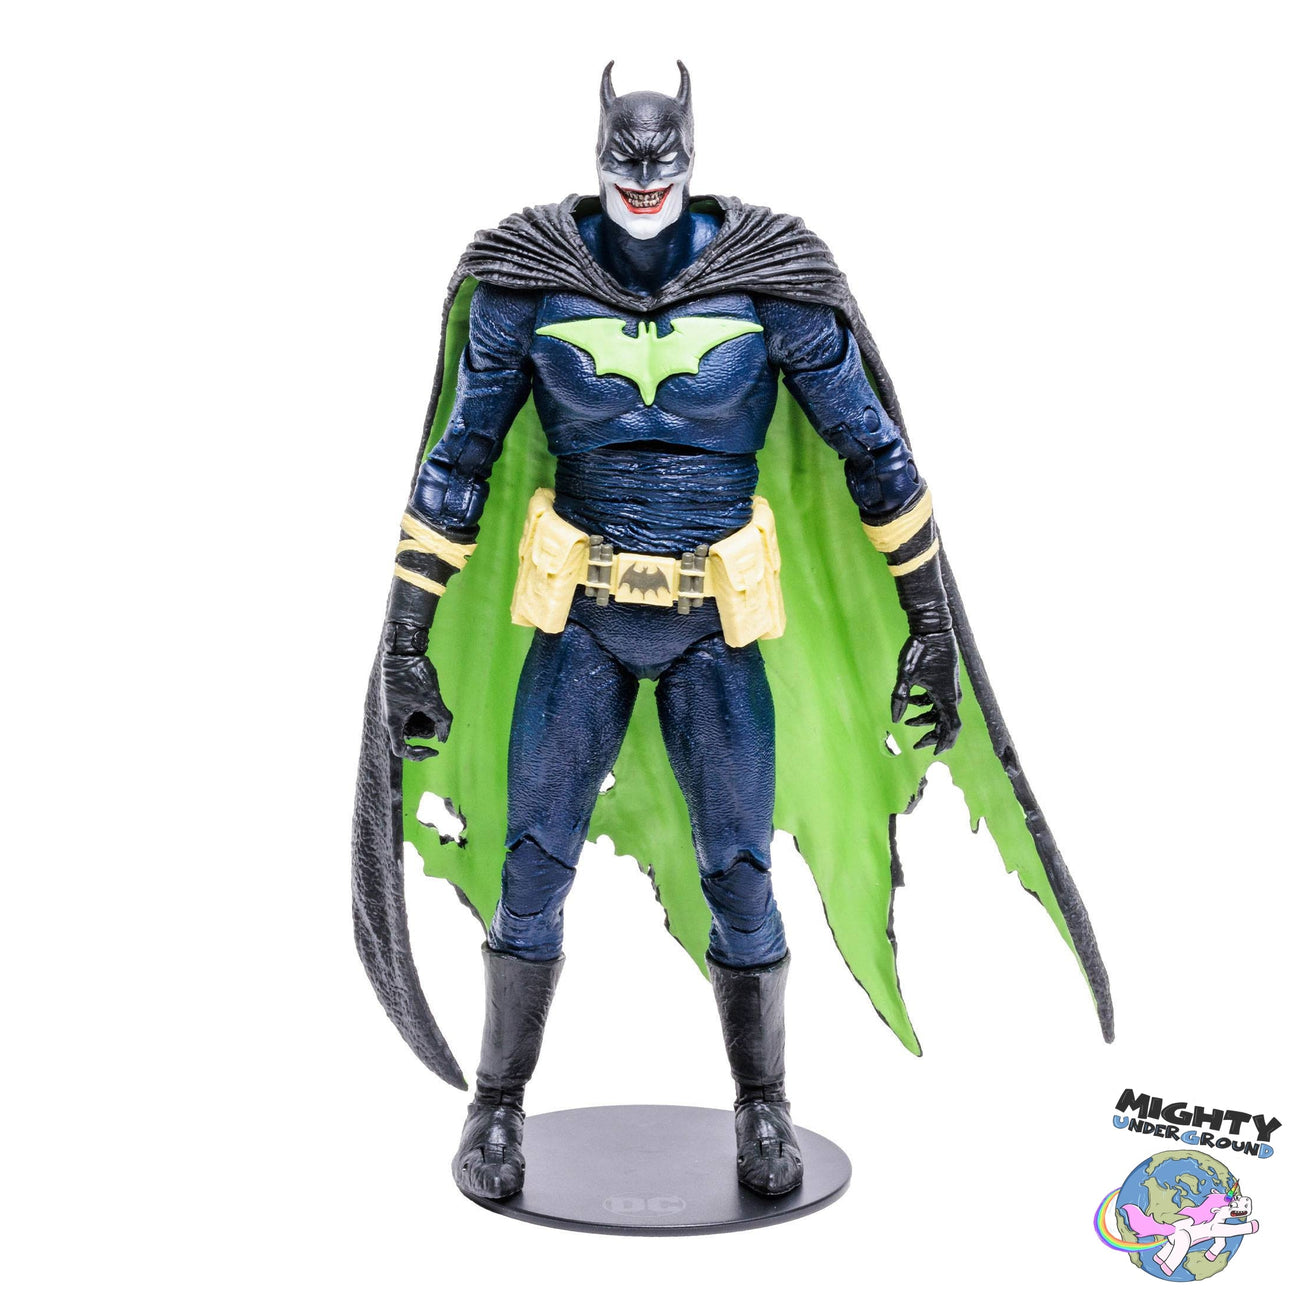 DC Multiverse: Batman of Earth-22 Infected (Dark Nights: Metal)-Actionfiguren-McFarlane Toys-Mighty Underground